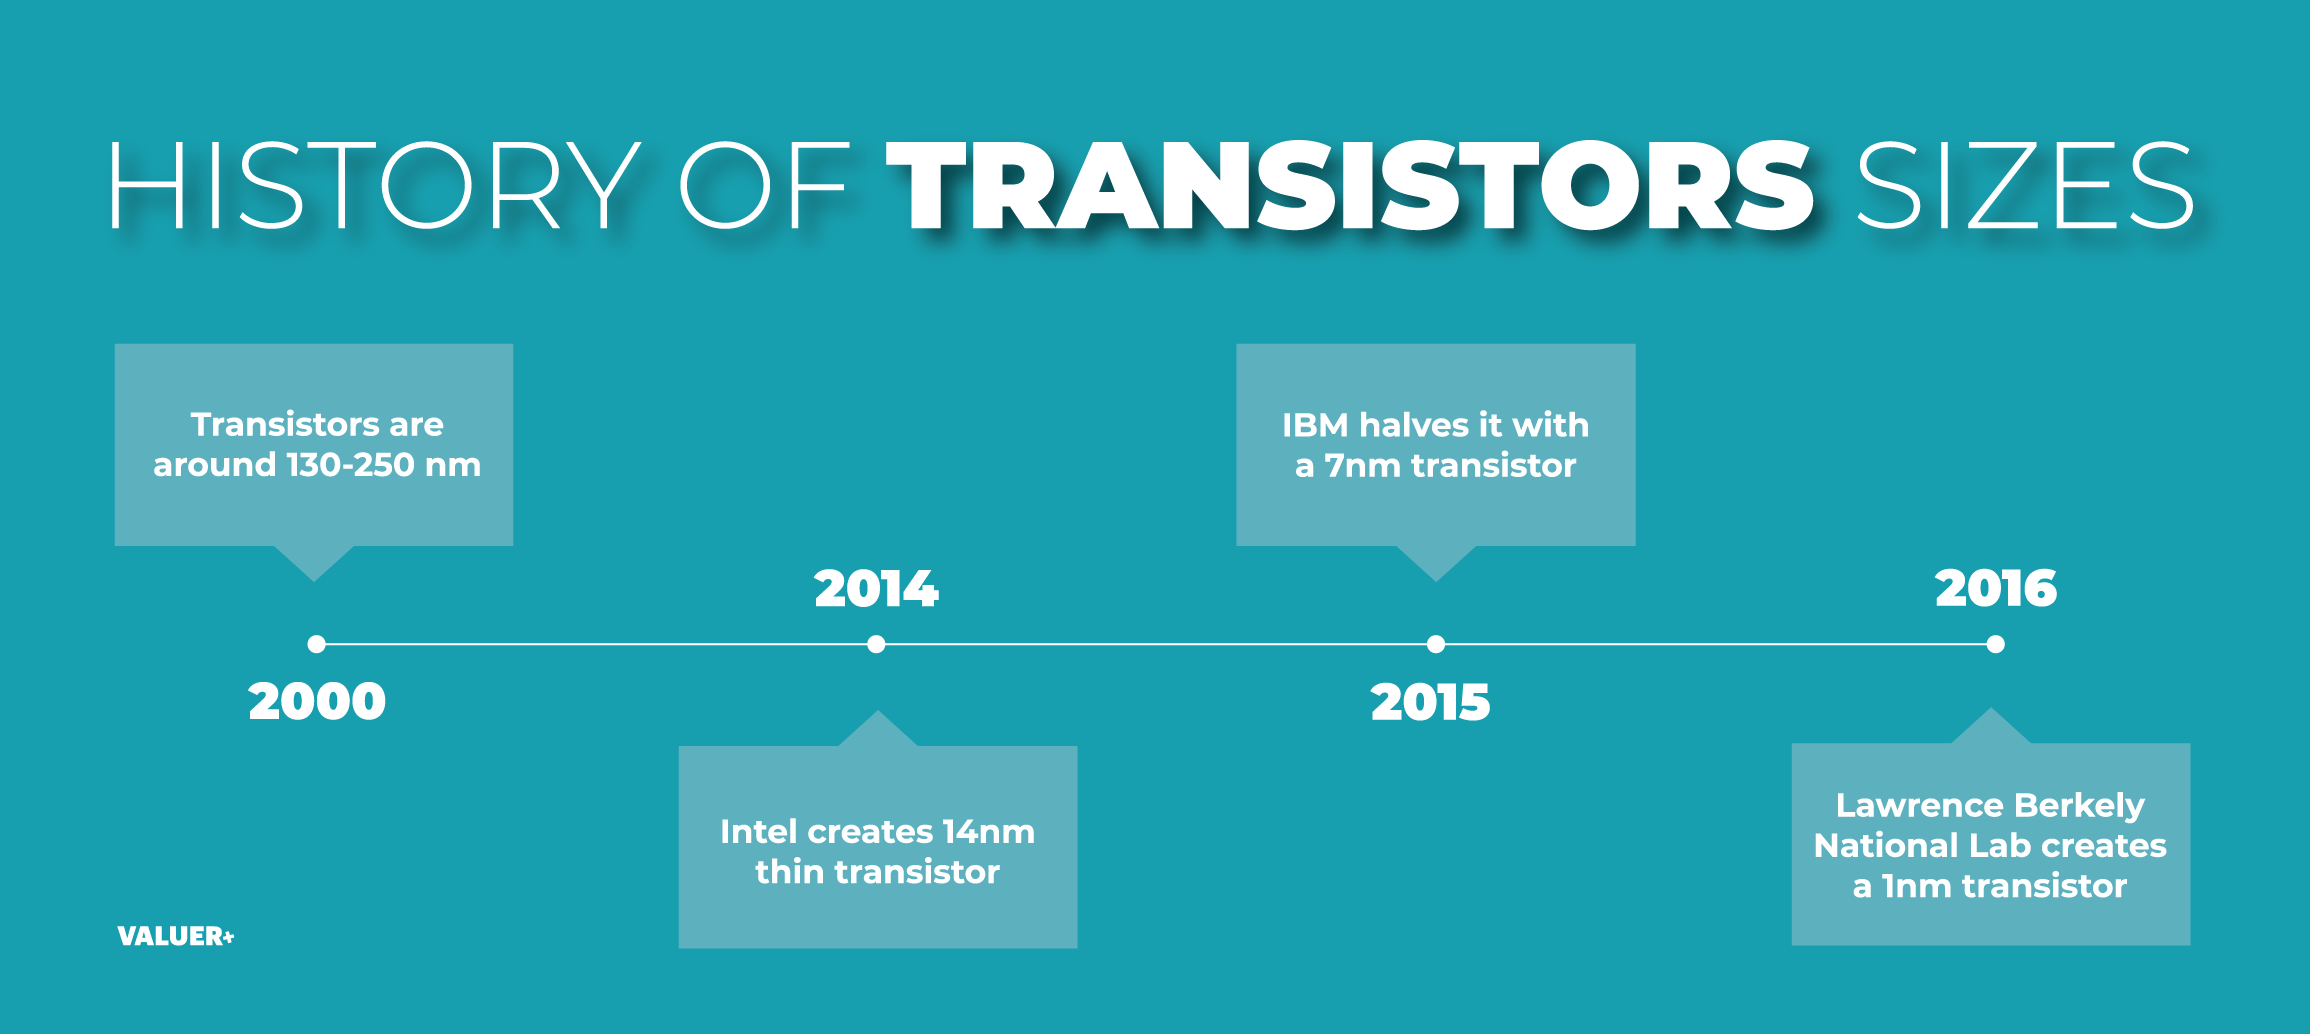 history of transistors graphic